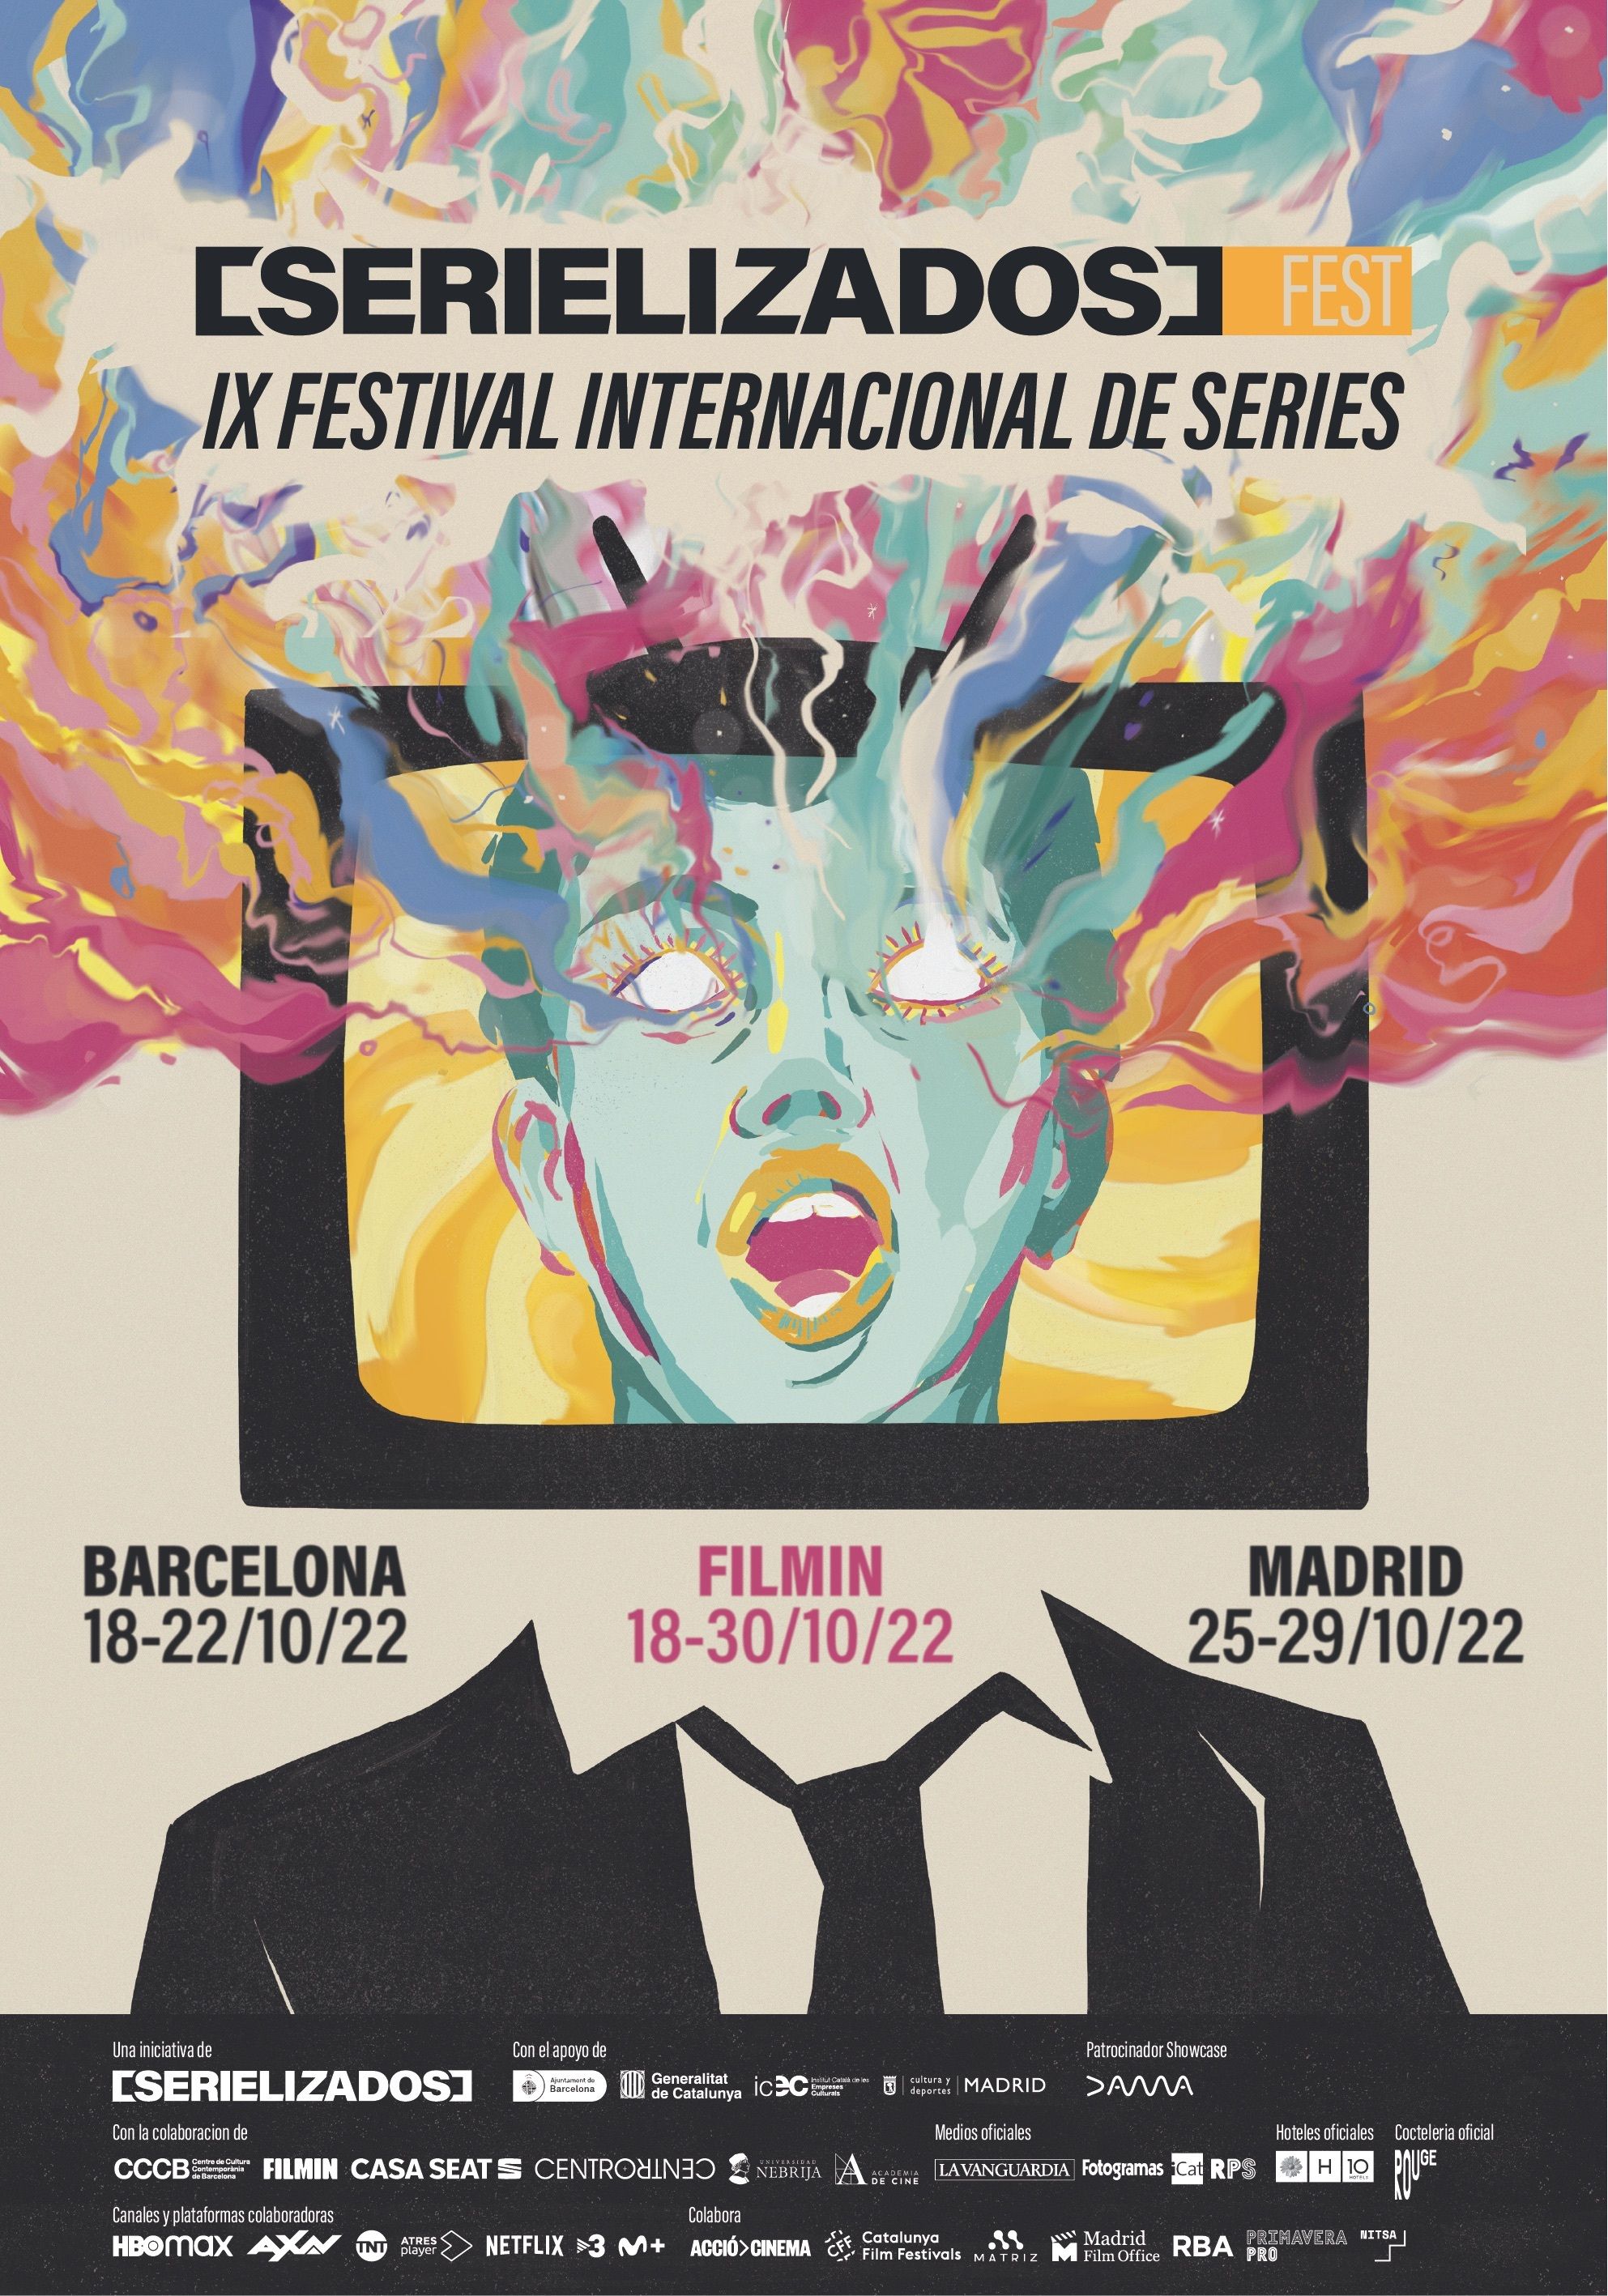 Serielizados Fest  10th International Series Festival